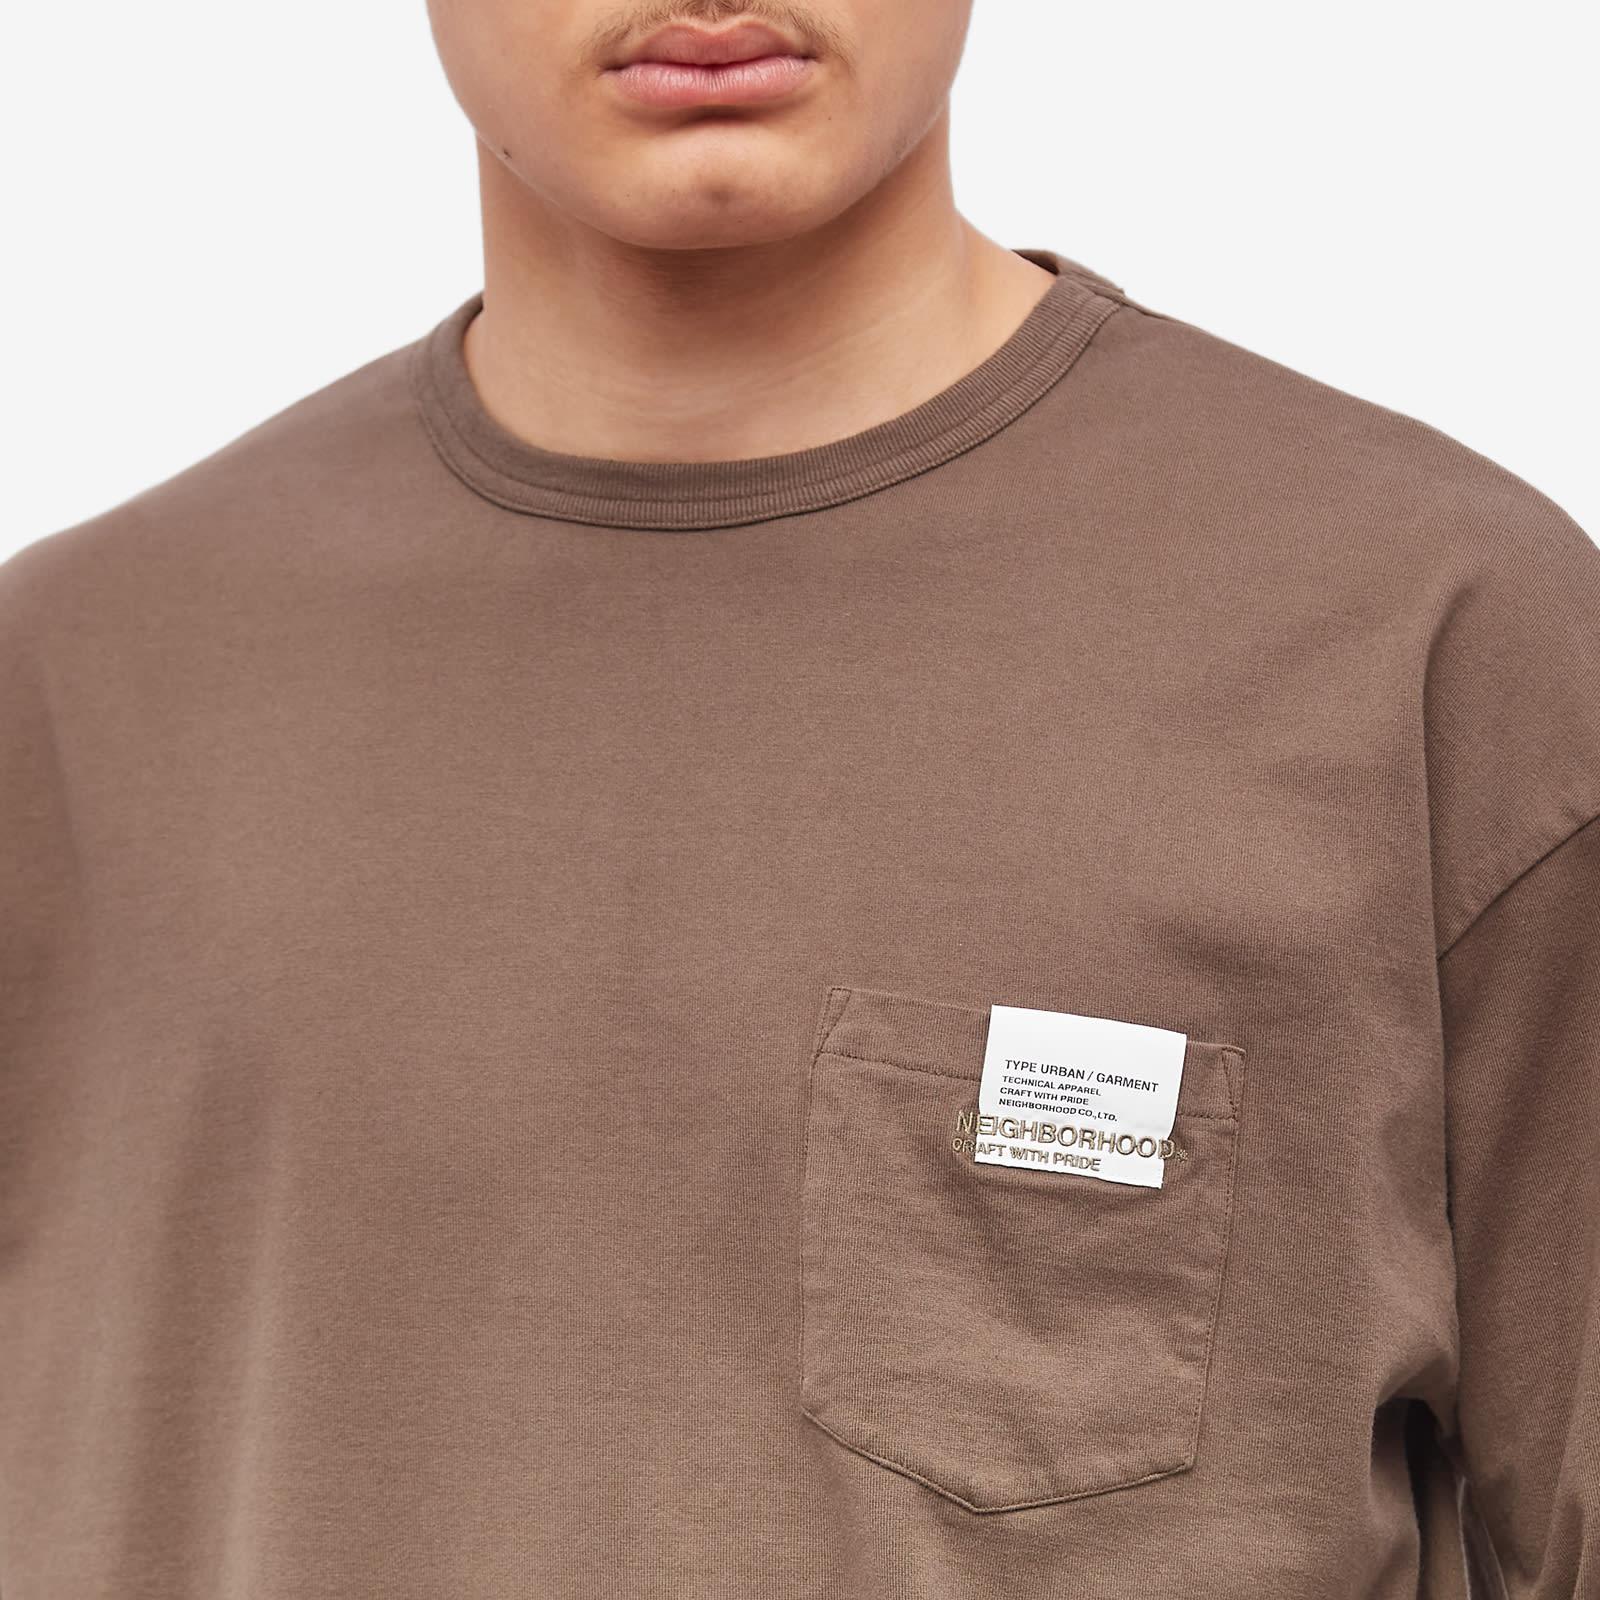 Lyst Classic Long for Men Neighborhood T-shirt in | Sleeve Brown Pocket